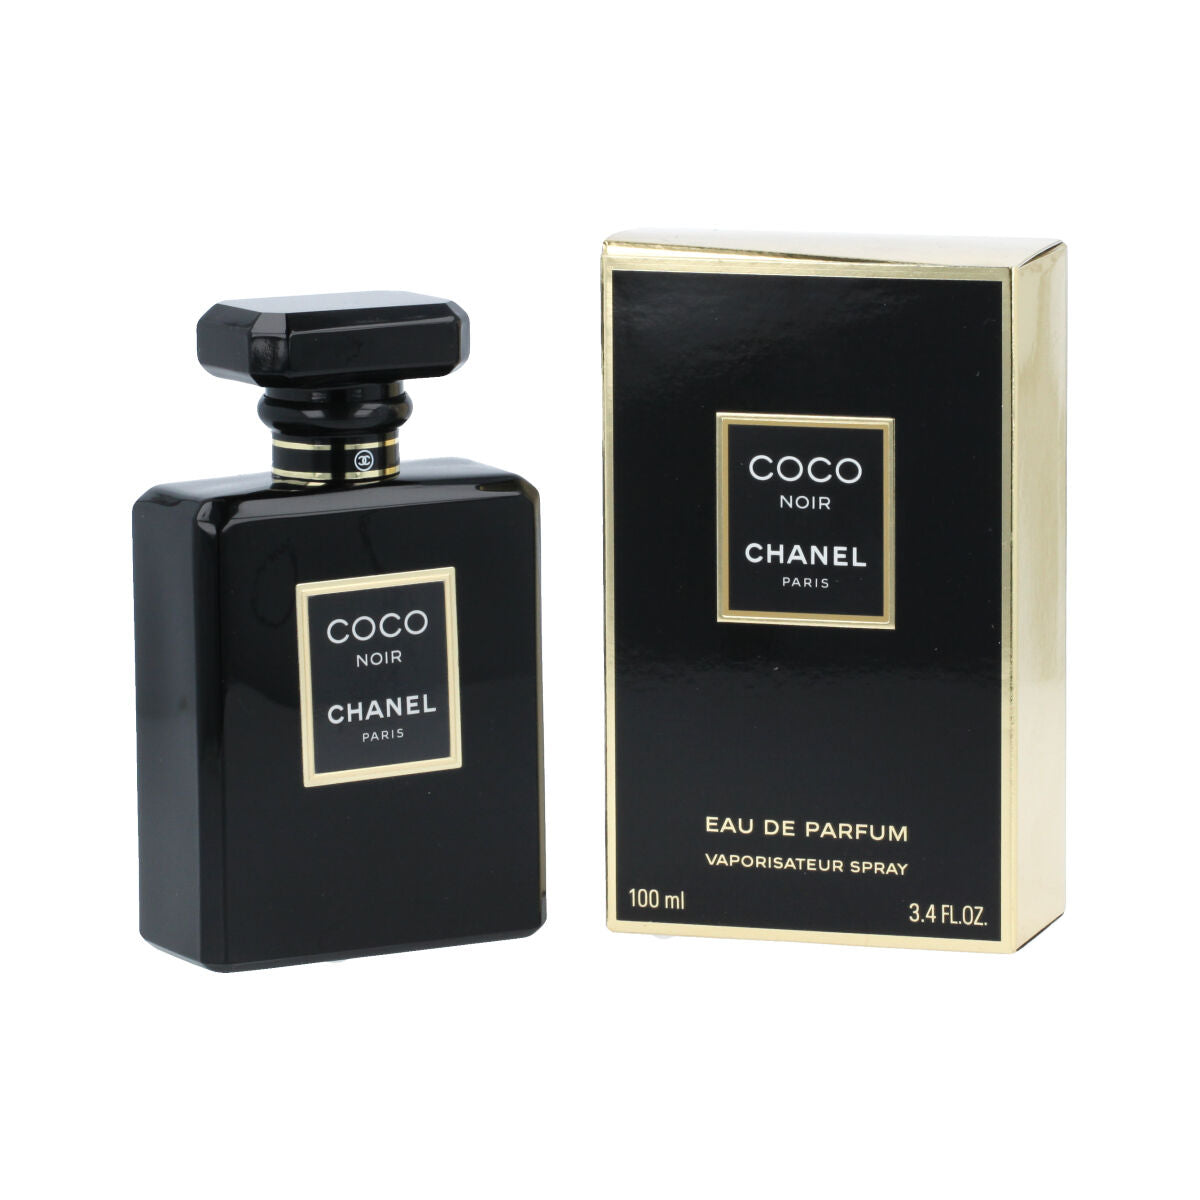 COCO NOIR BY CHANEL 3.4 fl oz/ 100 ML Eau De Parfum Spray BRAND NEW SEALED!  $3.25 - PicClick